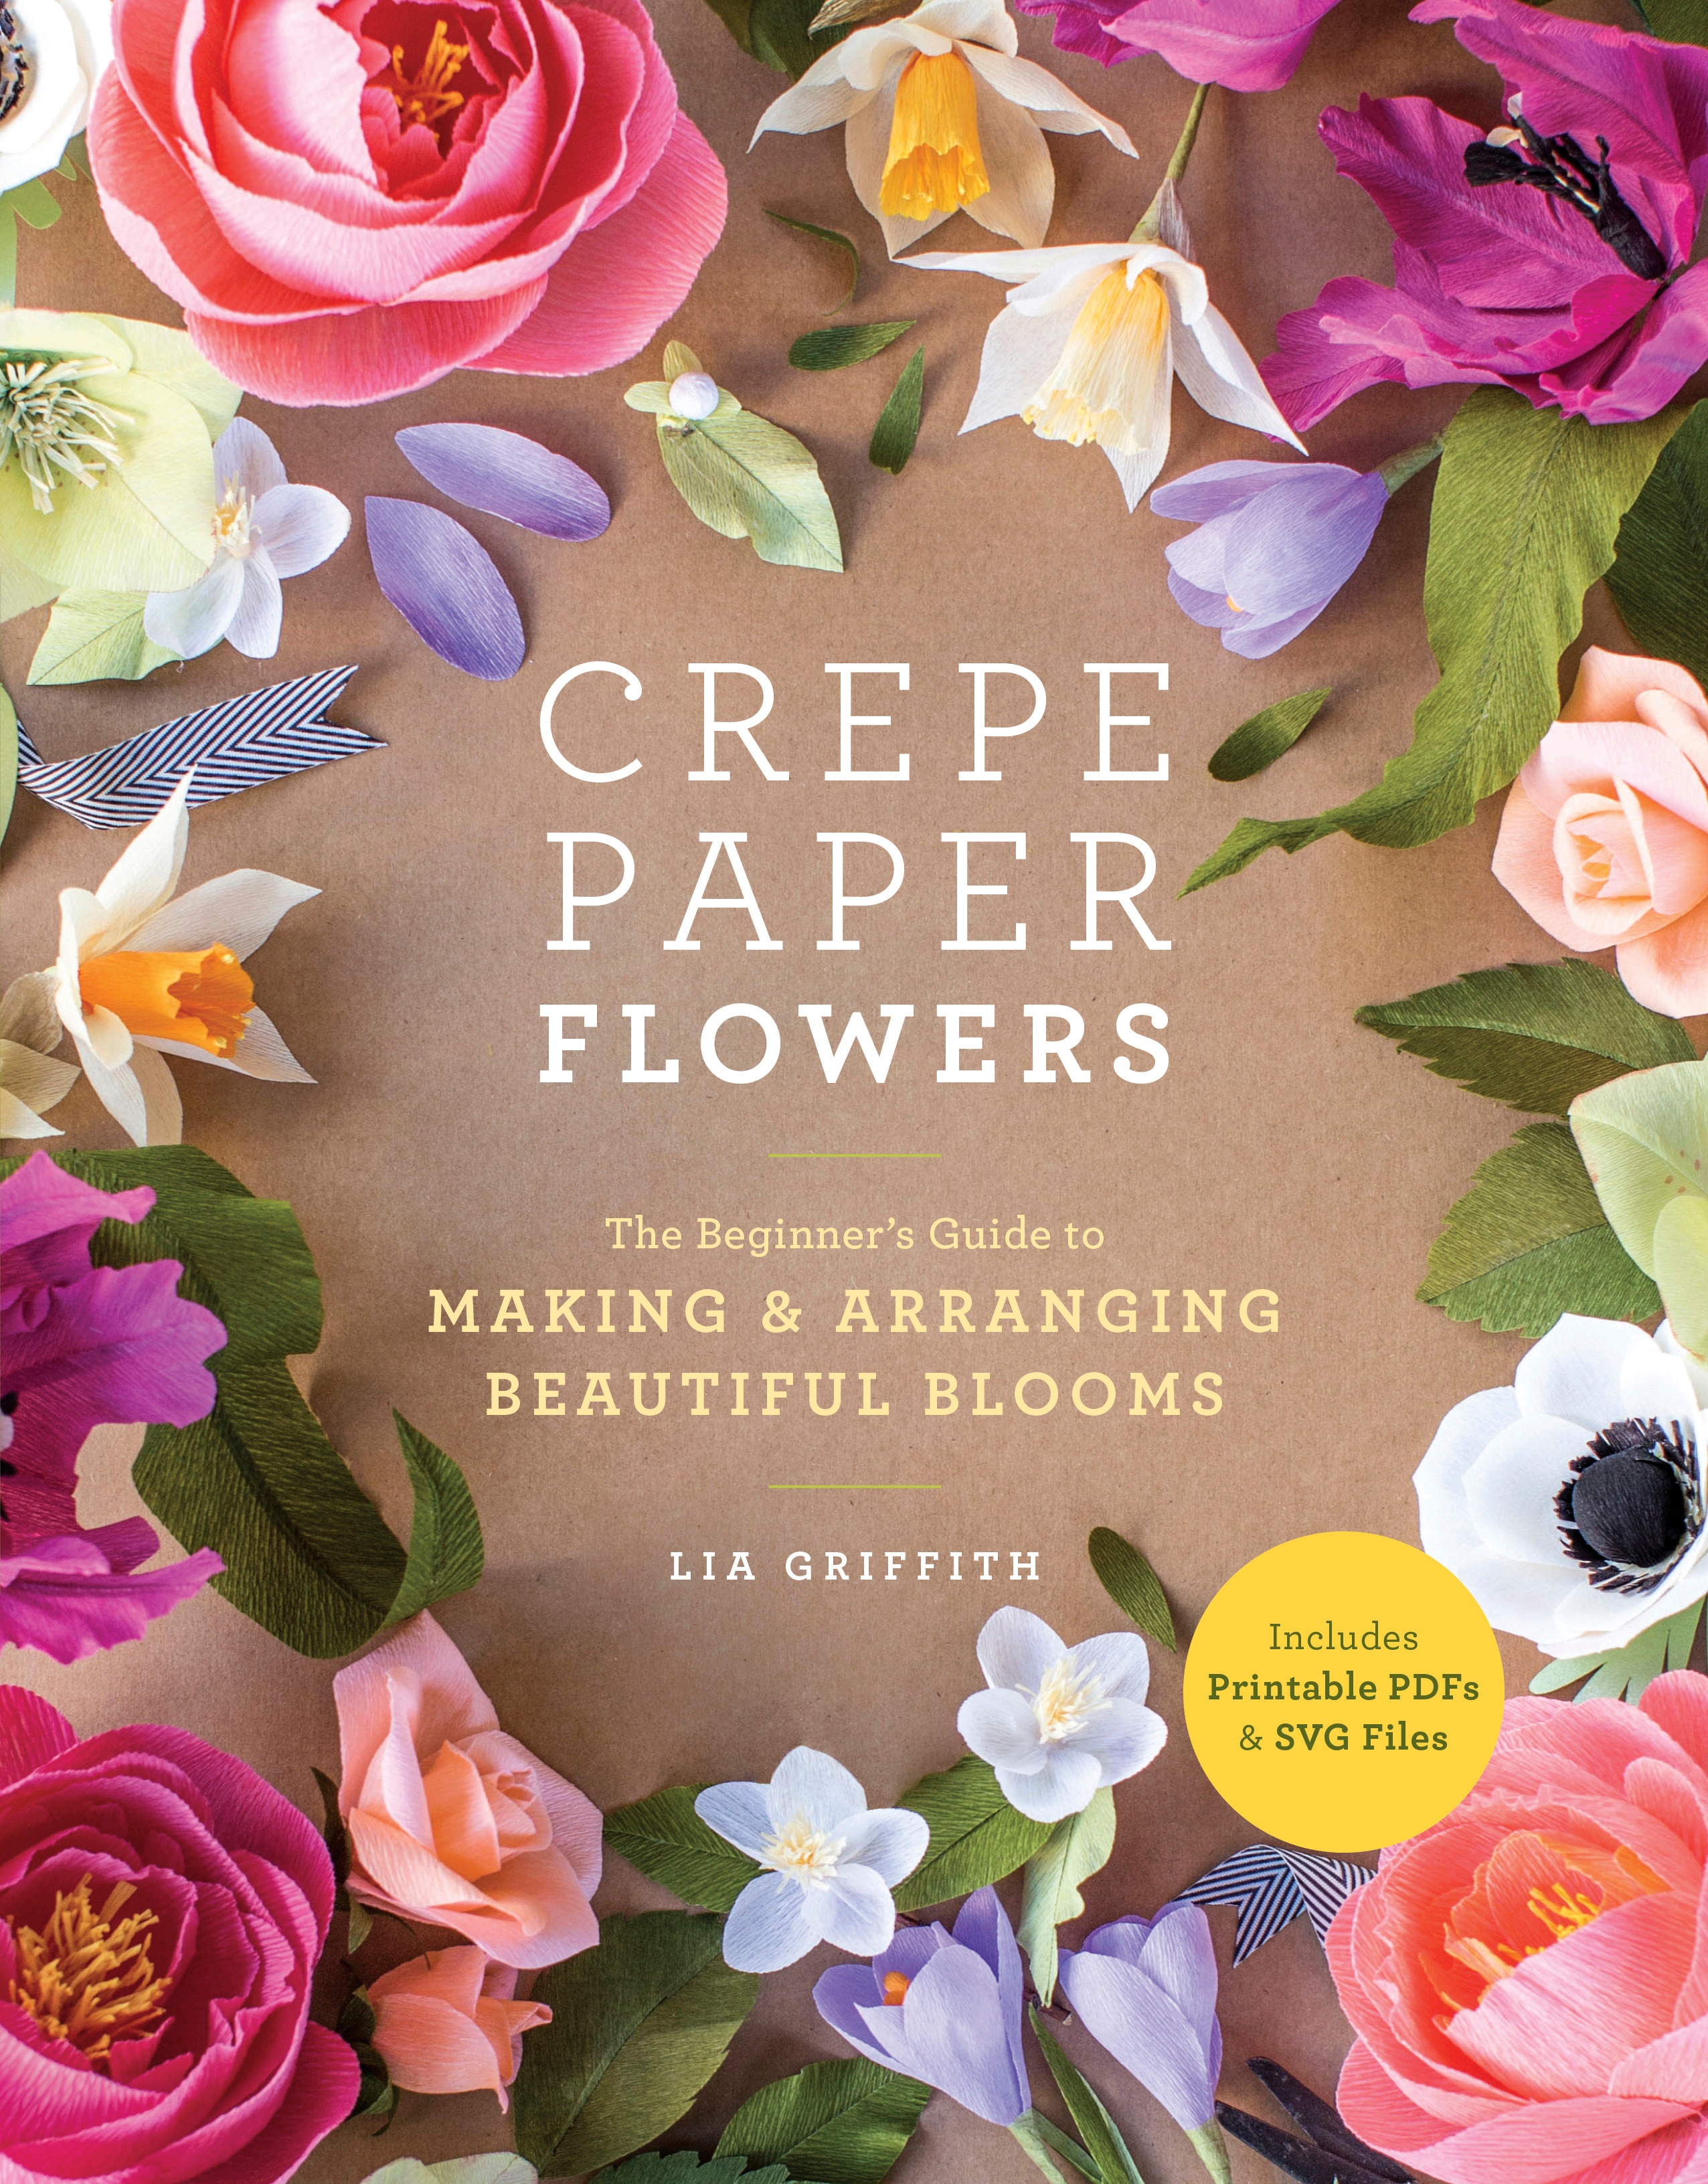 crepe paper flowers by lia griffith - penguin books australia